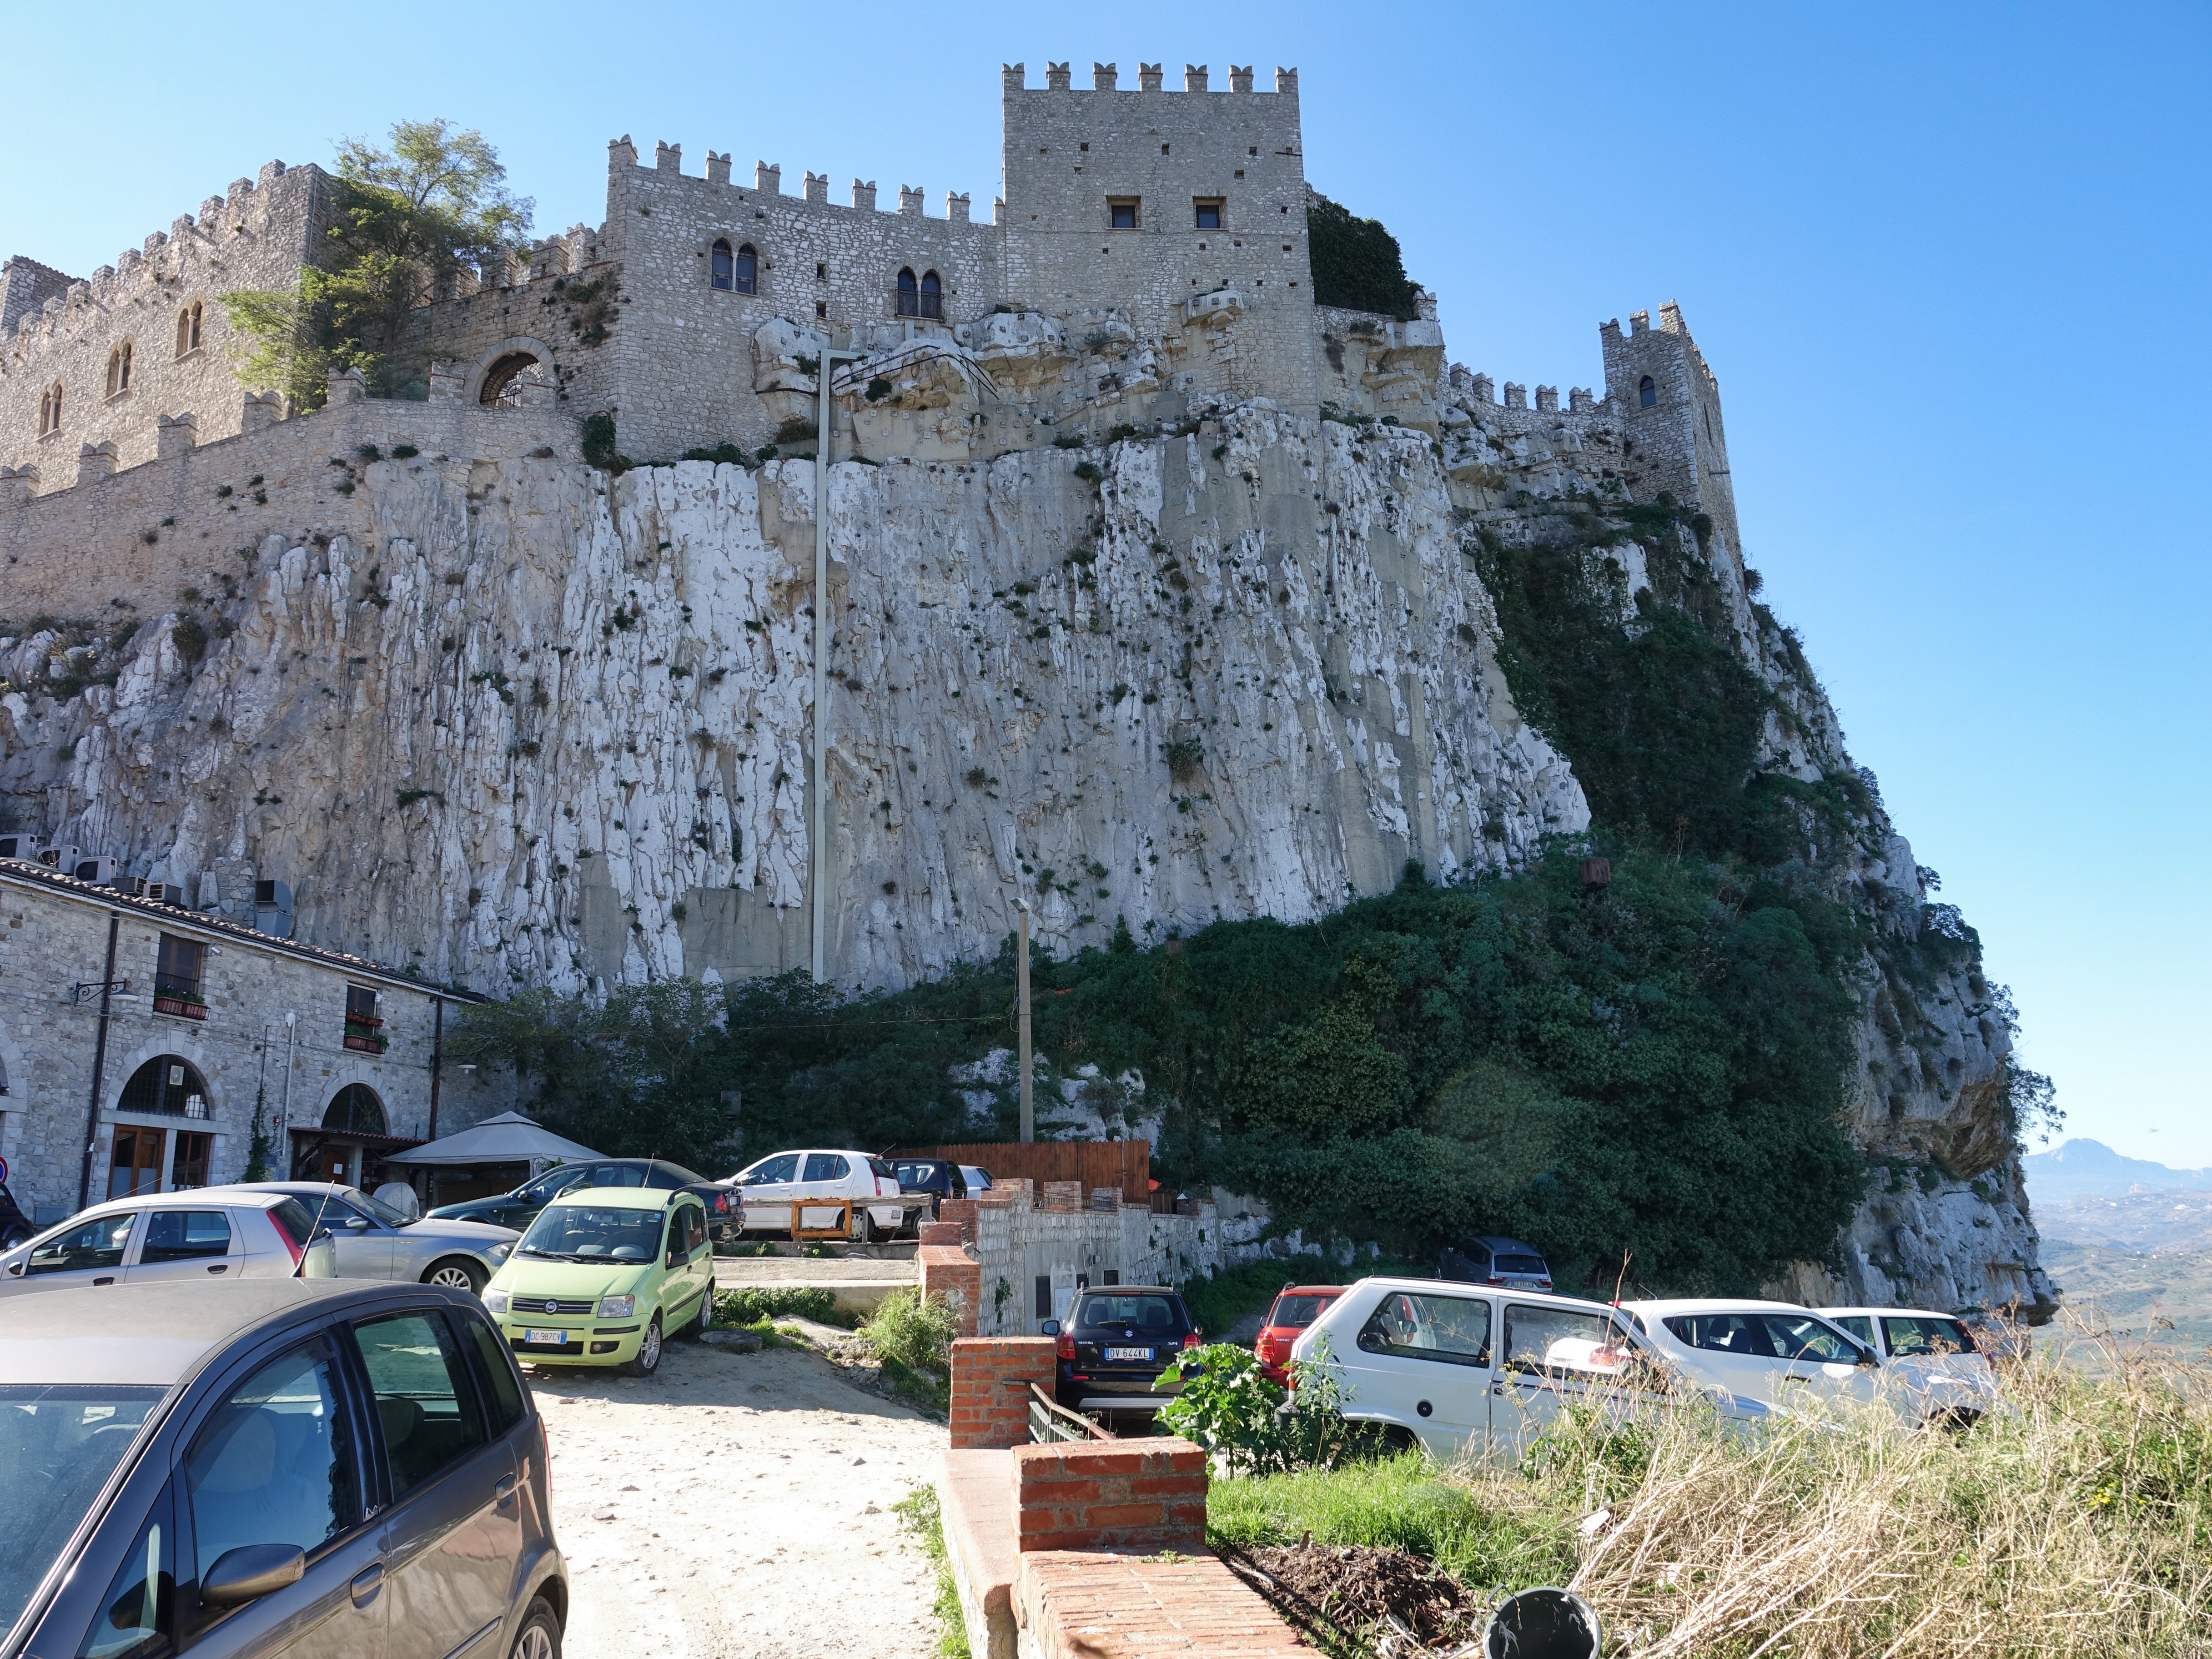 Impressive Norman castle at Caccamo (Castello di Caccamo), built on top of a sheer cliffside